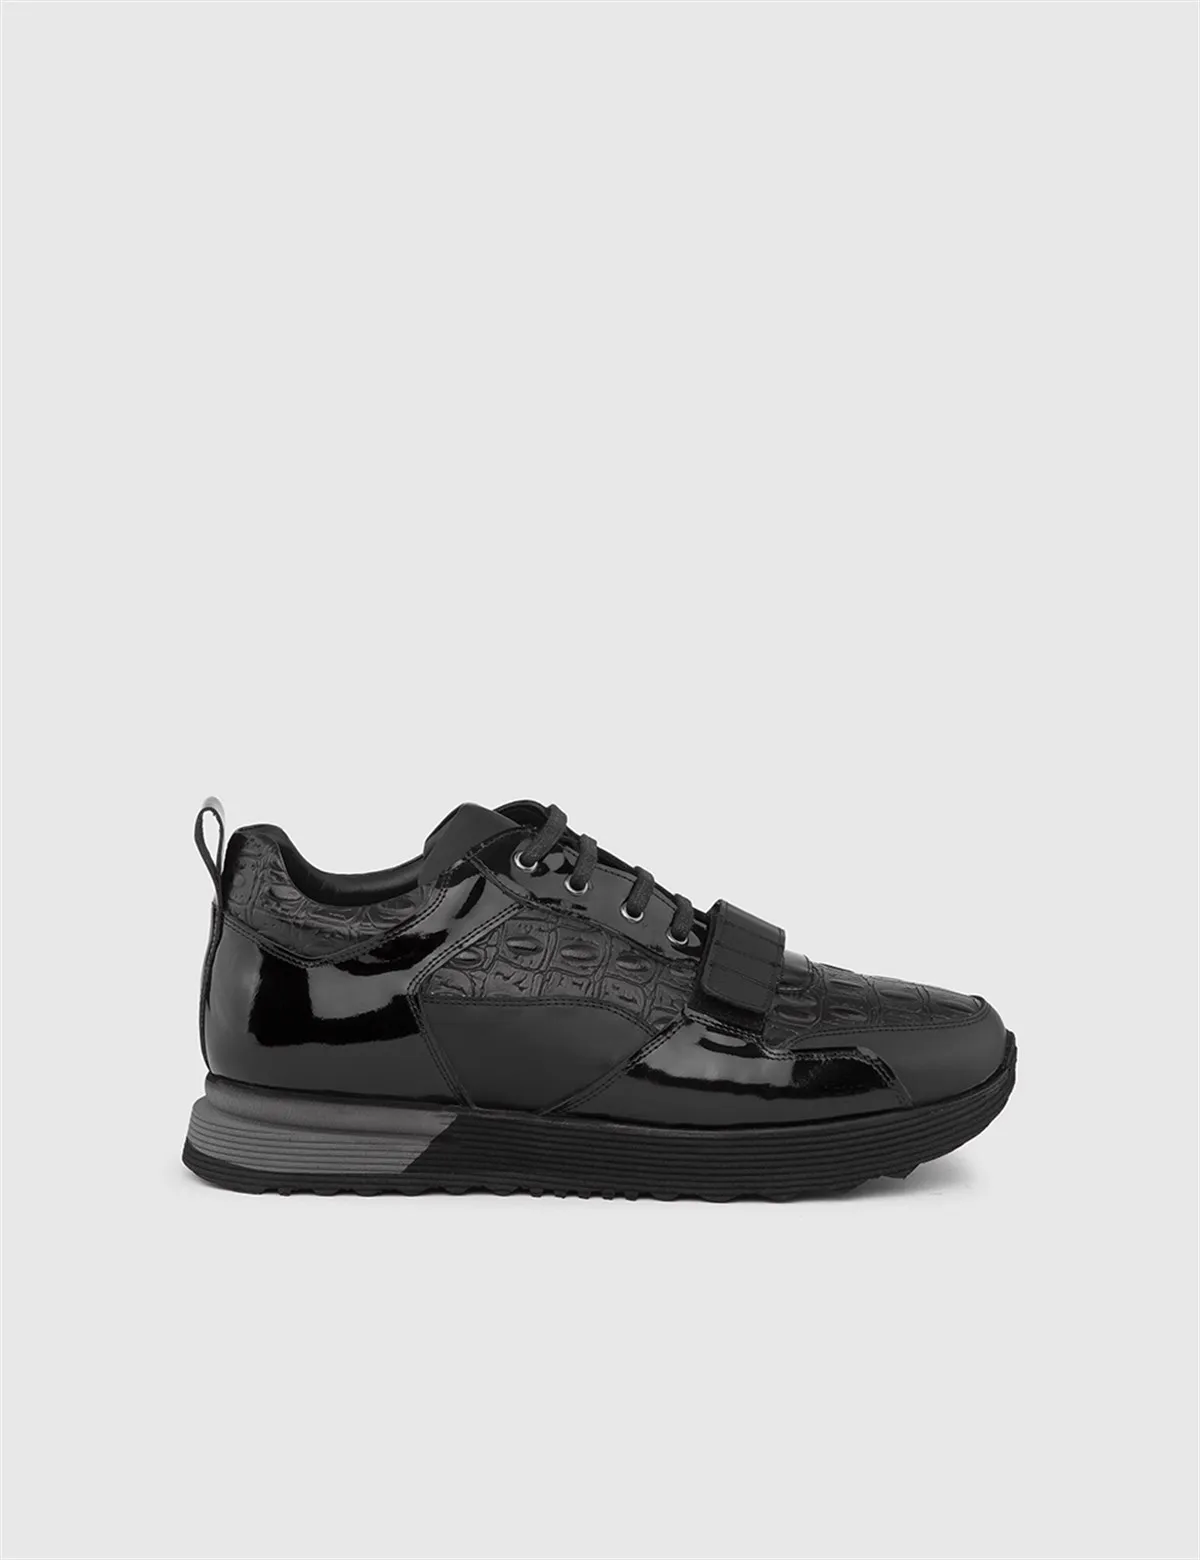 

ILVi-Genuine Leather Handmade Markus Black Leather Crocodile Men's Sneaker Man's Shoes 2022 Fall/Winter